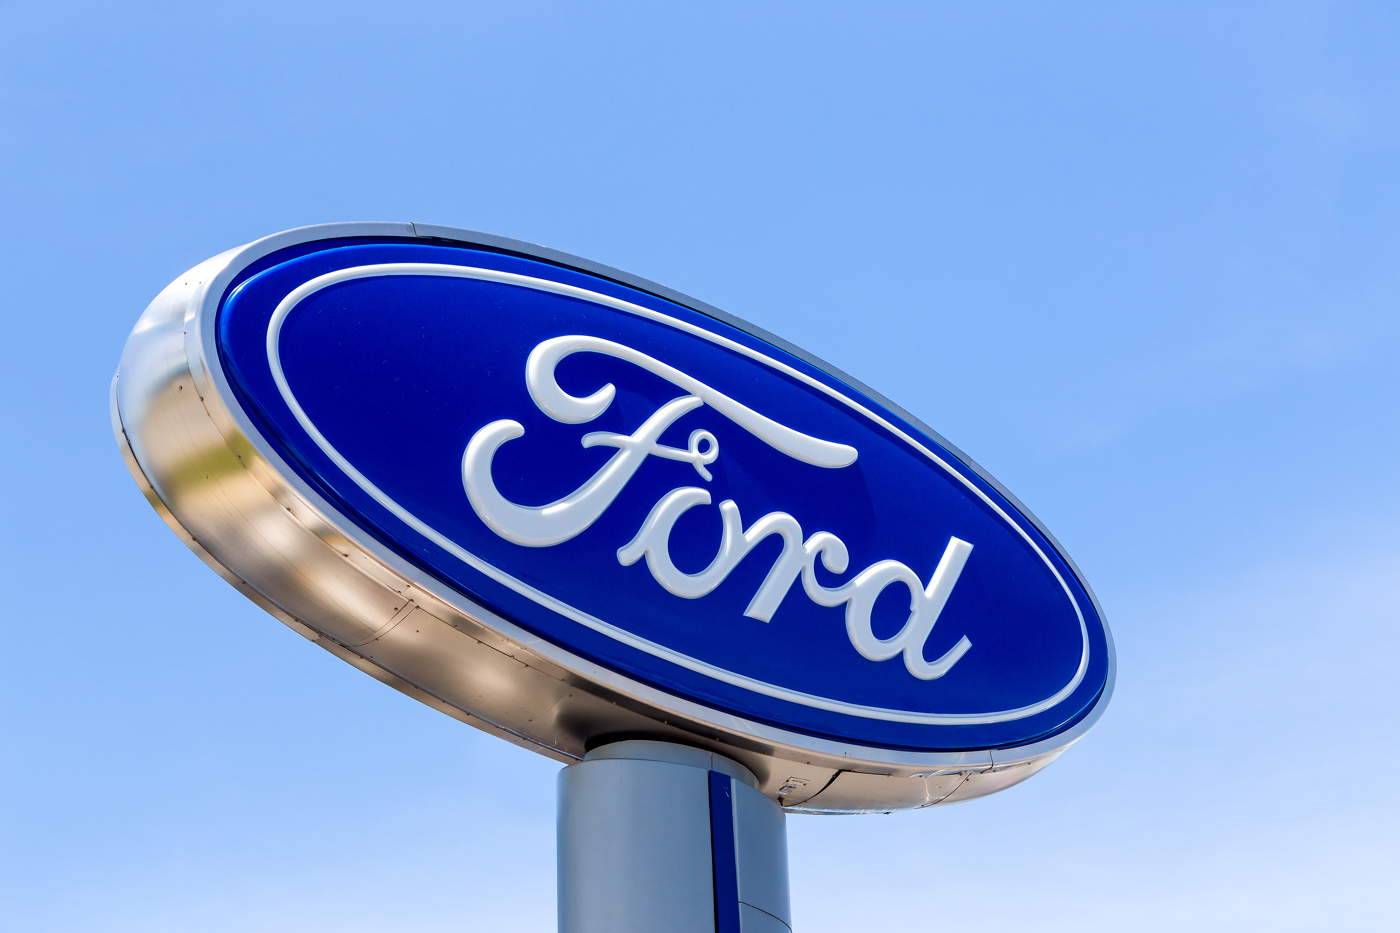 Ford stock, F stock, automobile stocks, car stocks